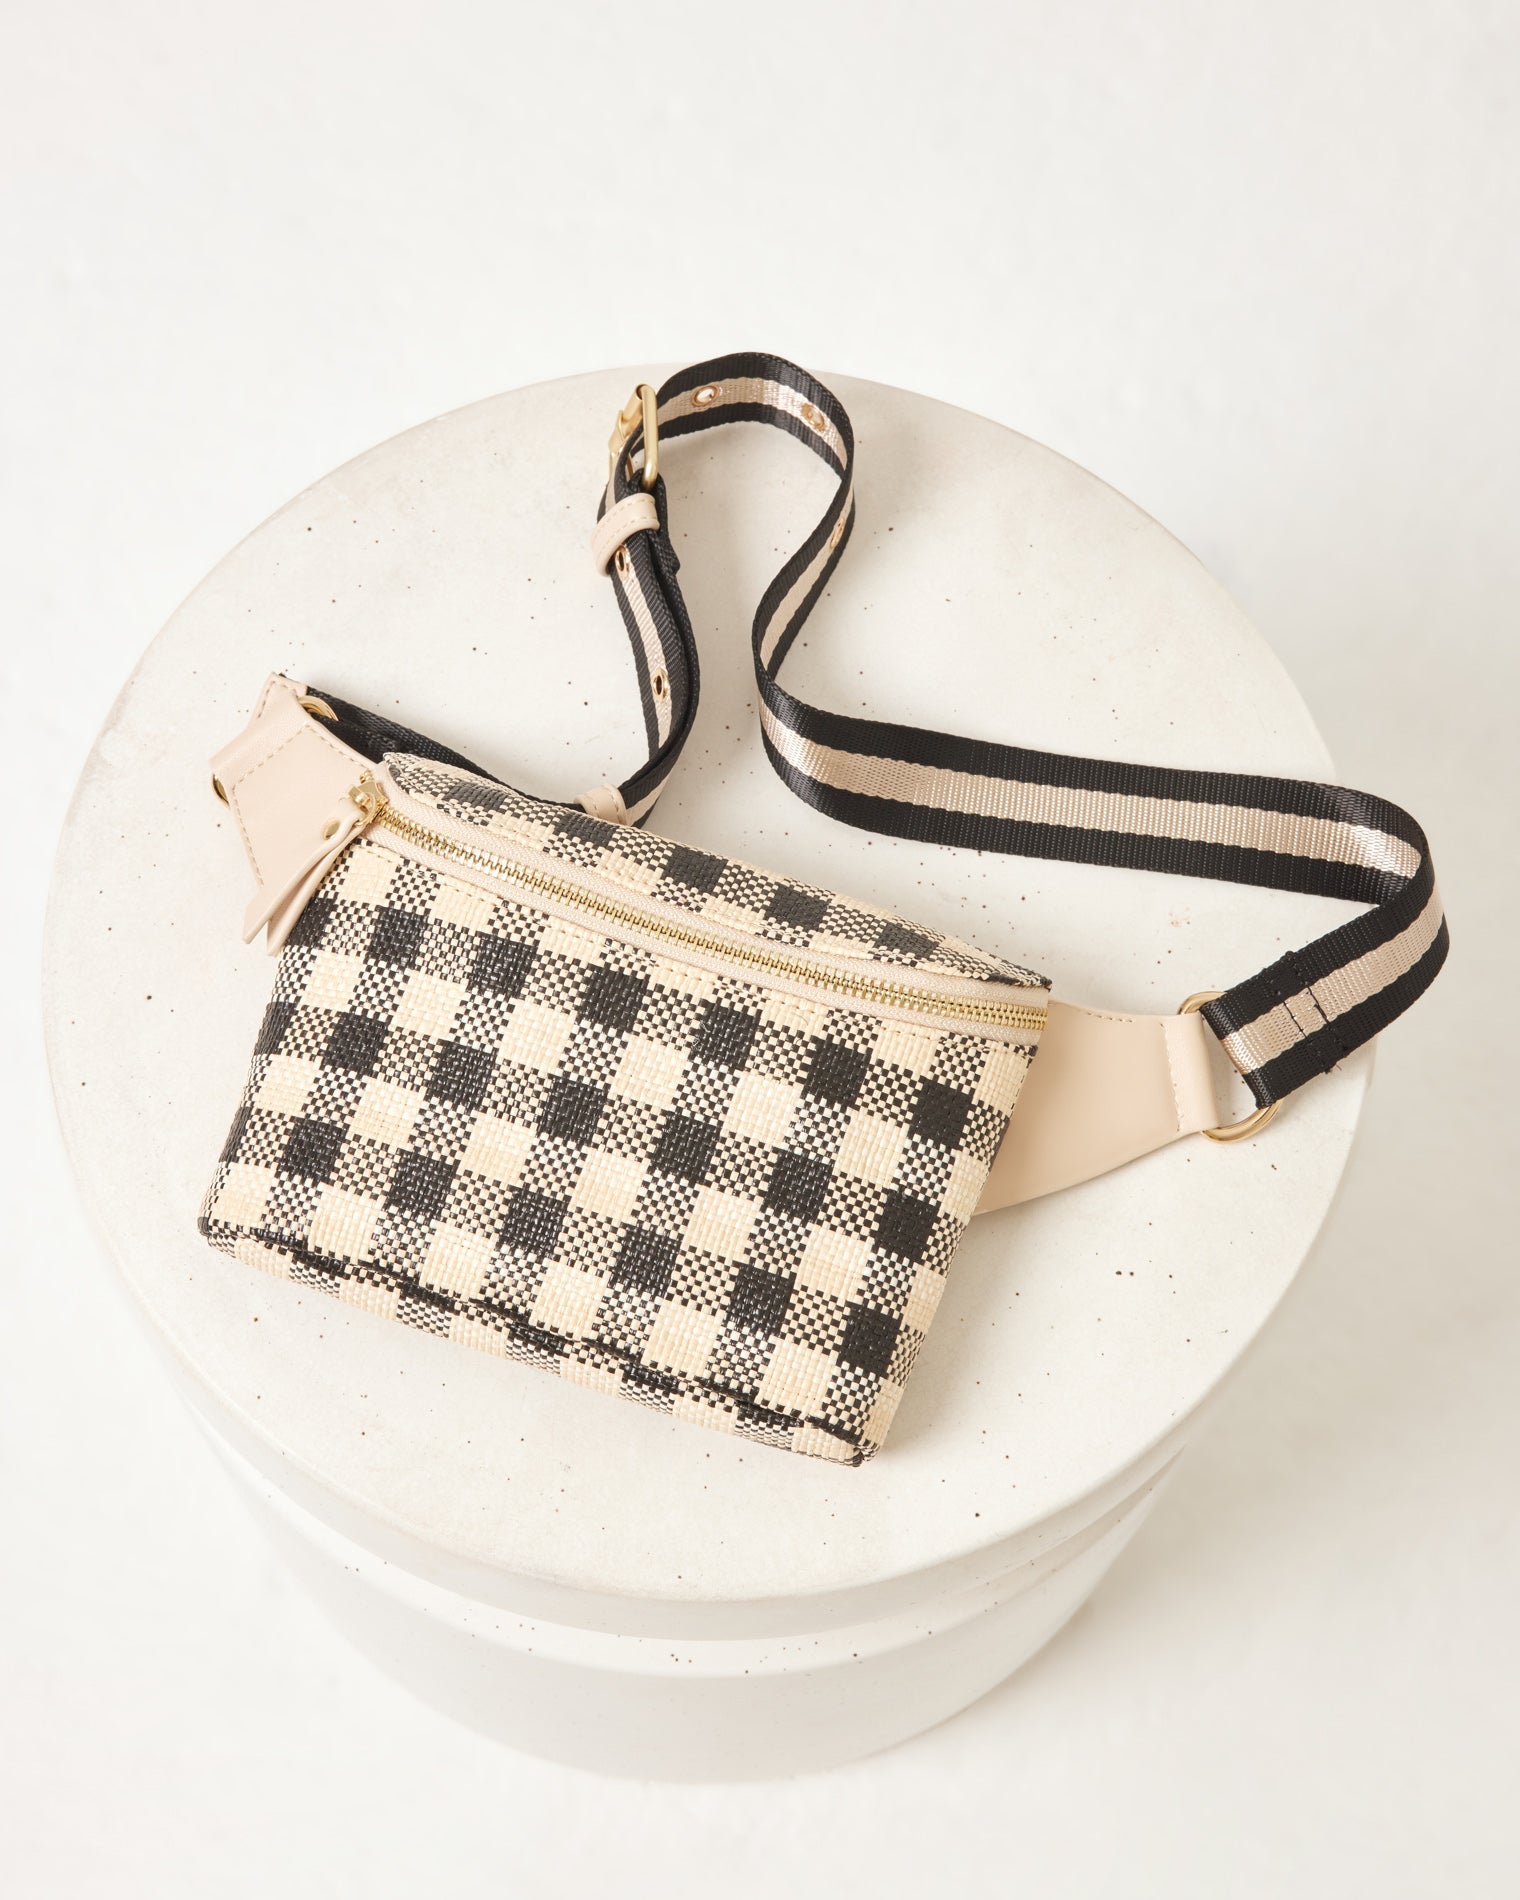 Shop Aesthetic & Versatile Waist Bags Online